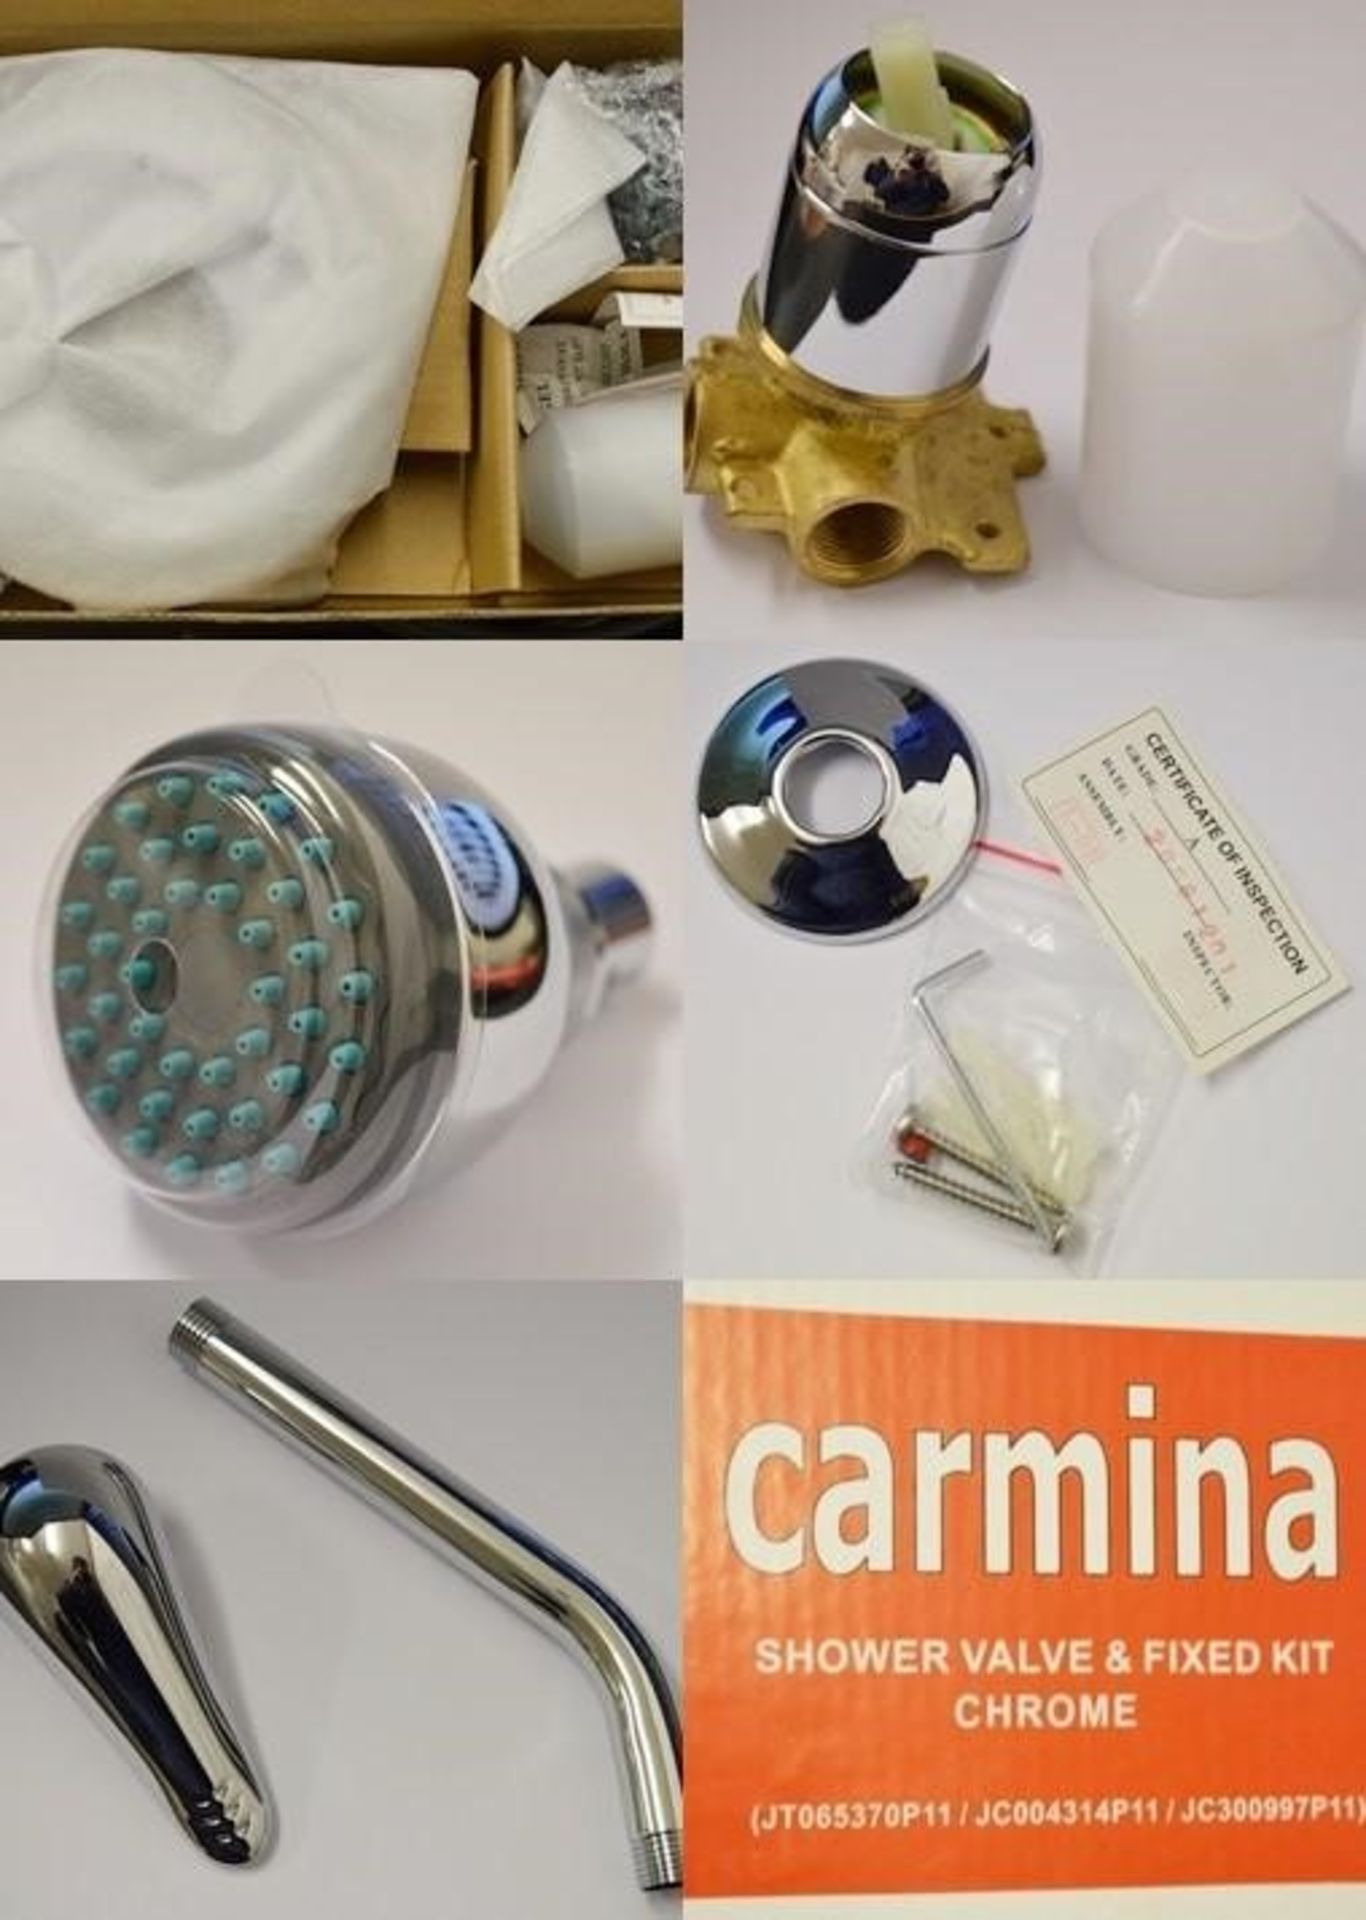 5 x Carmina Shower Valve Kit - Contains Chrome Shower Head, Fixed Arm and Manual Control